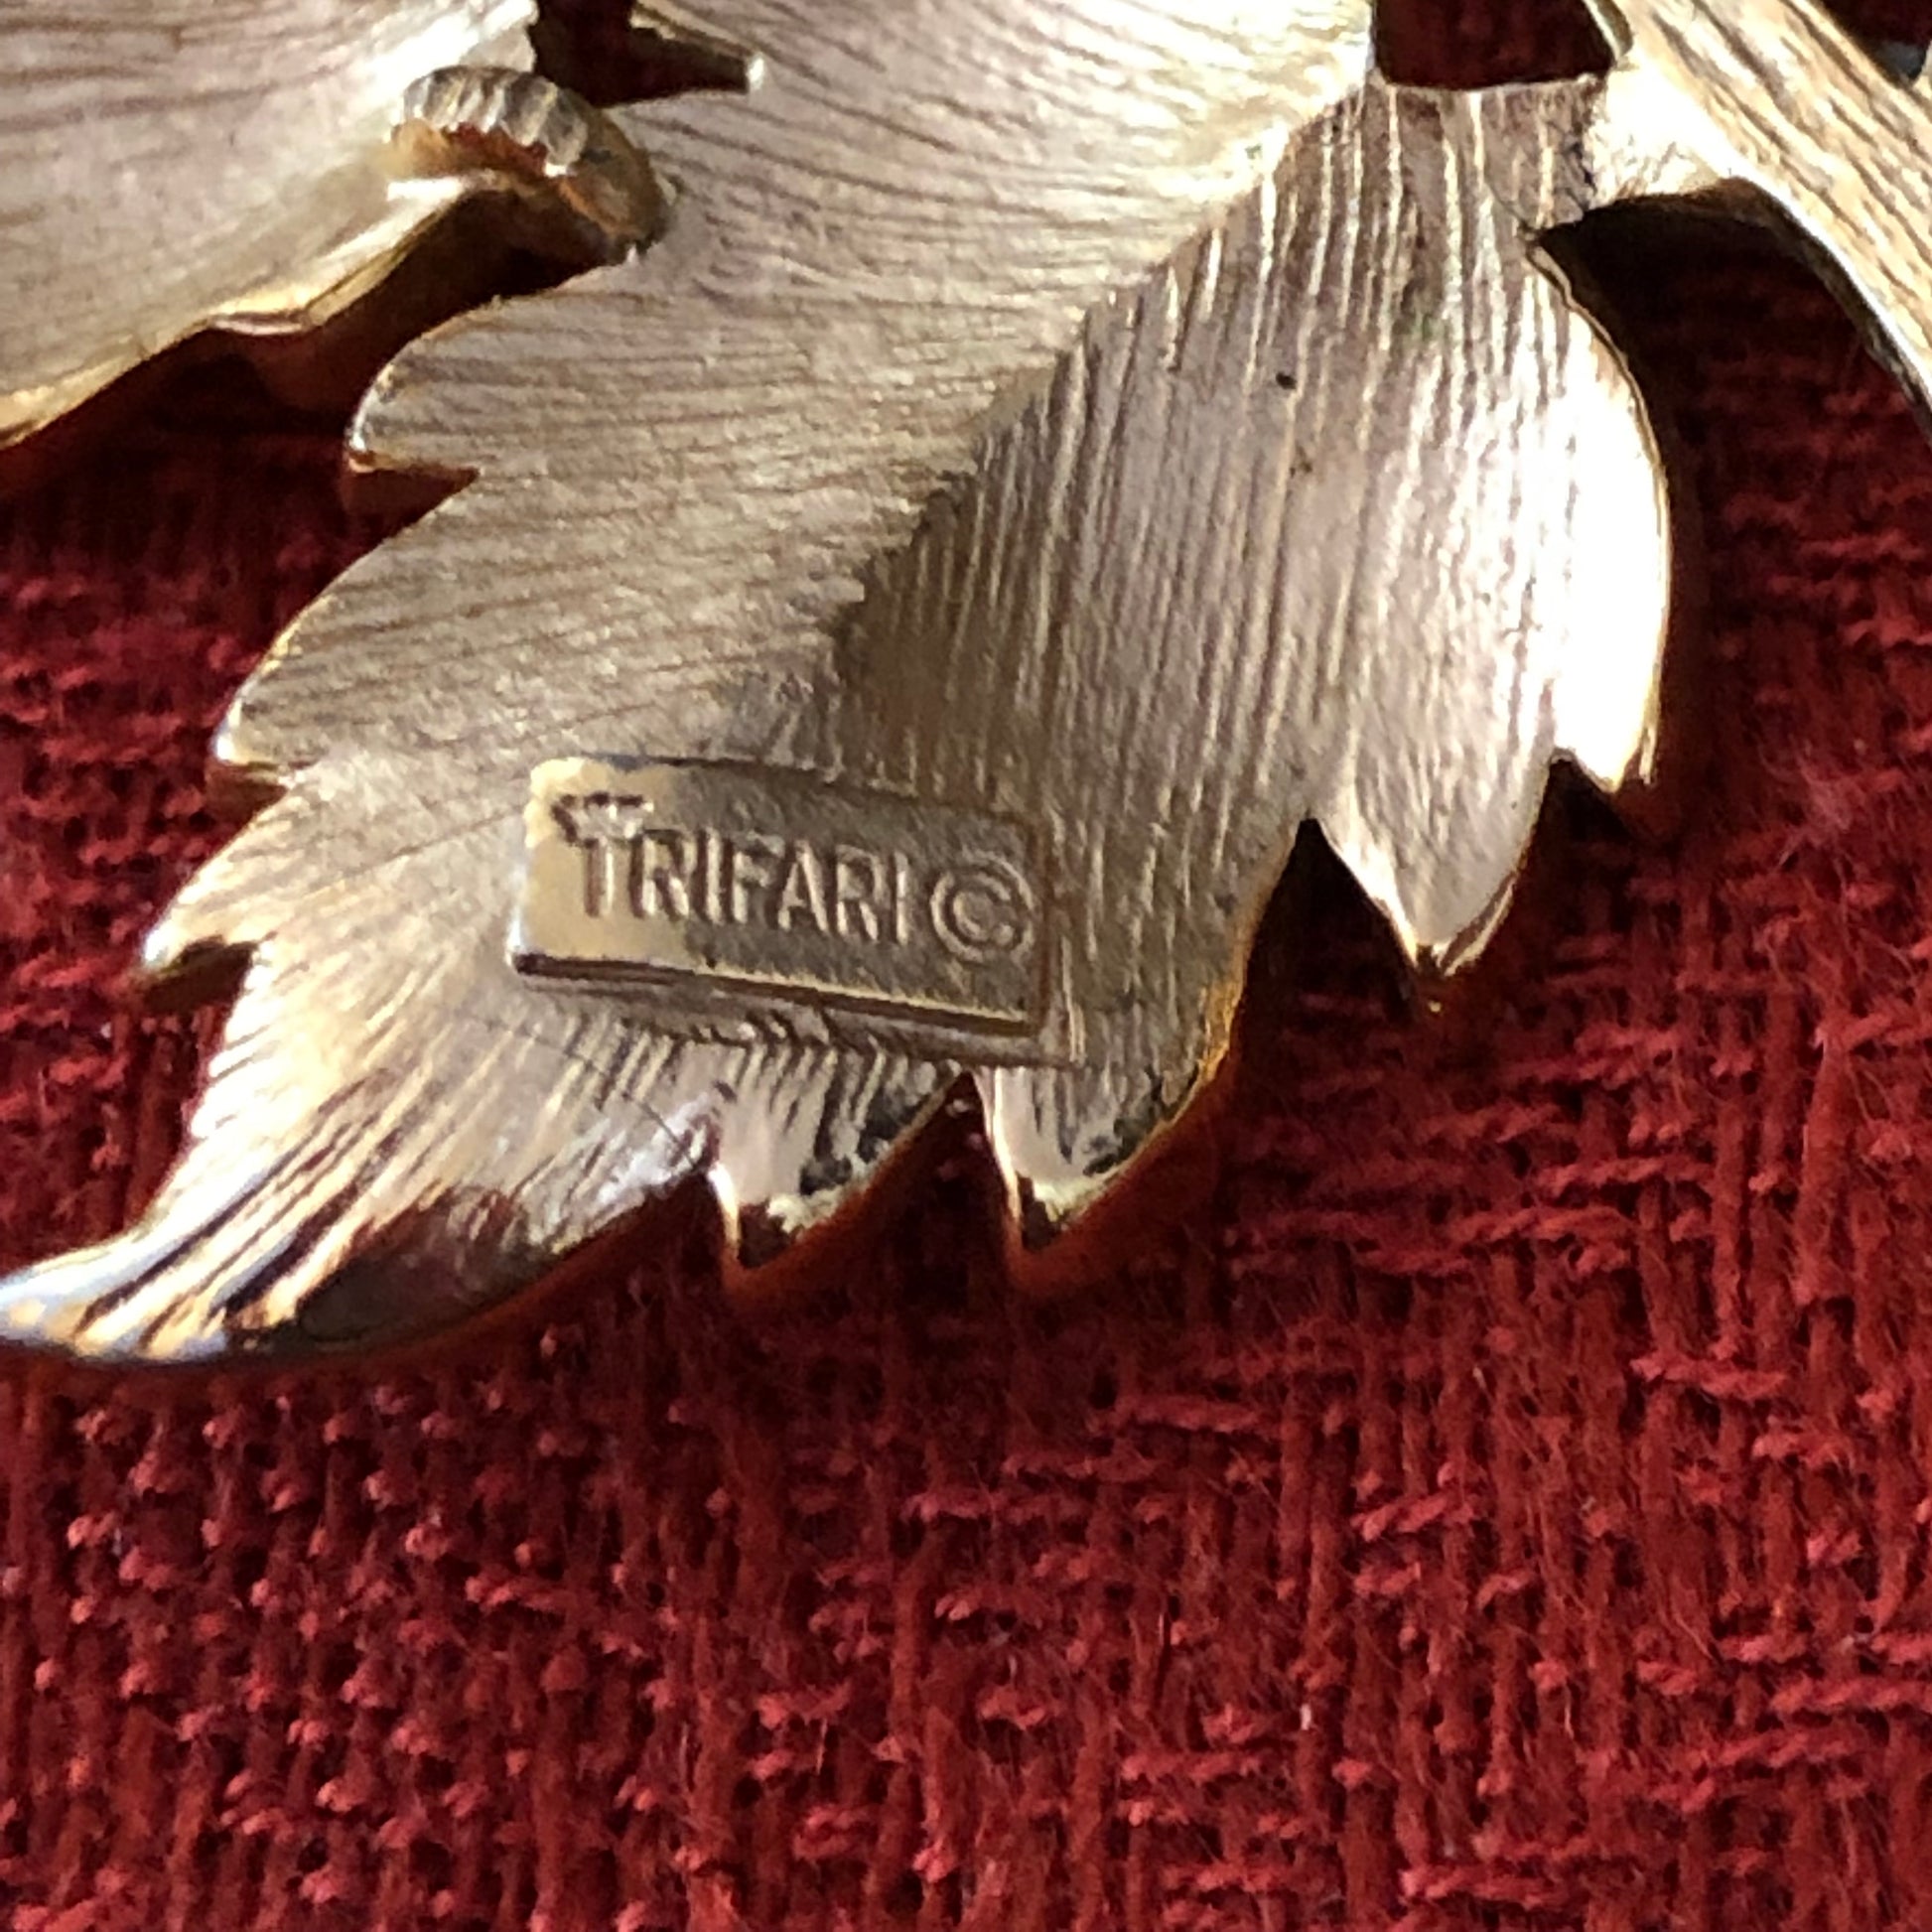 Trifari Vintage Ivy Leaf Brooch - Gold-Tone Metal Pin, Brooches